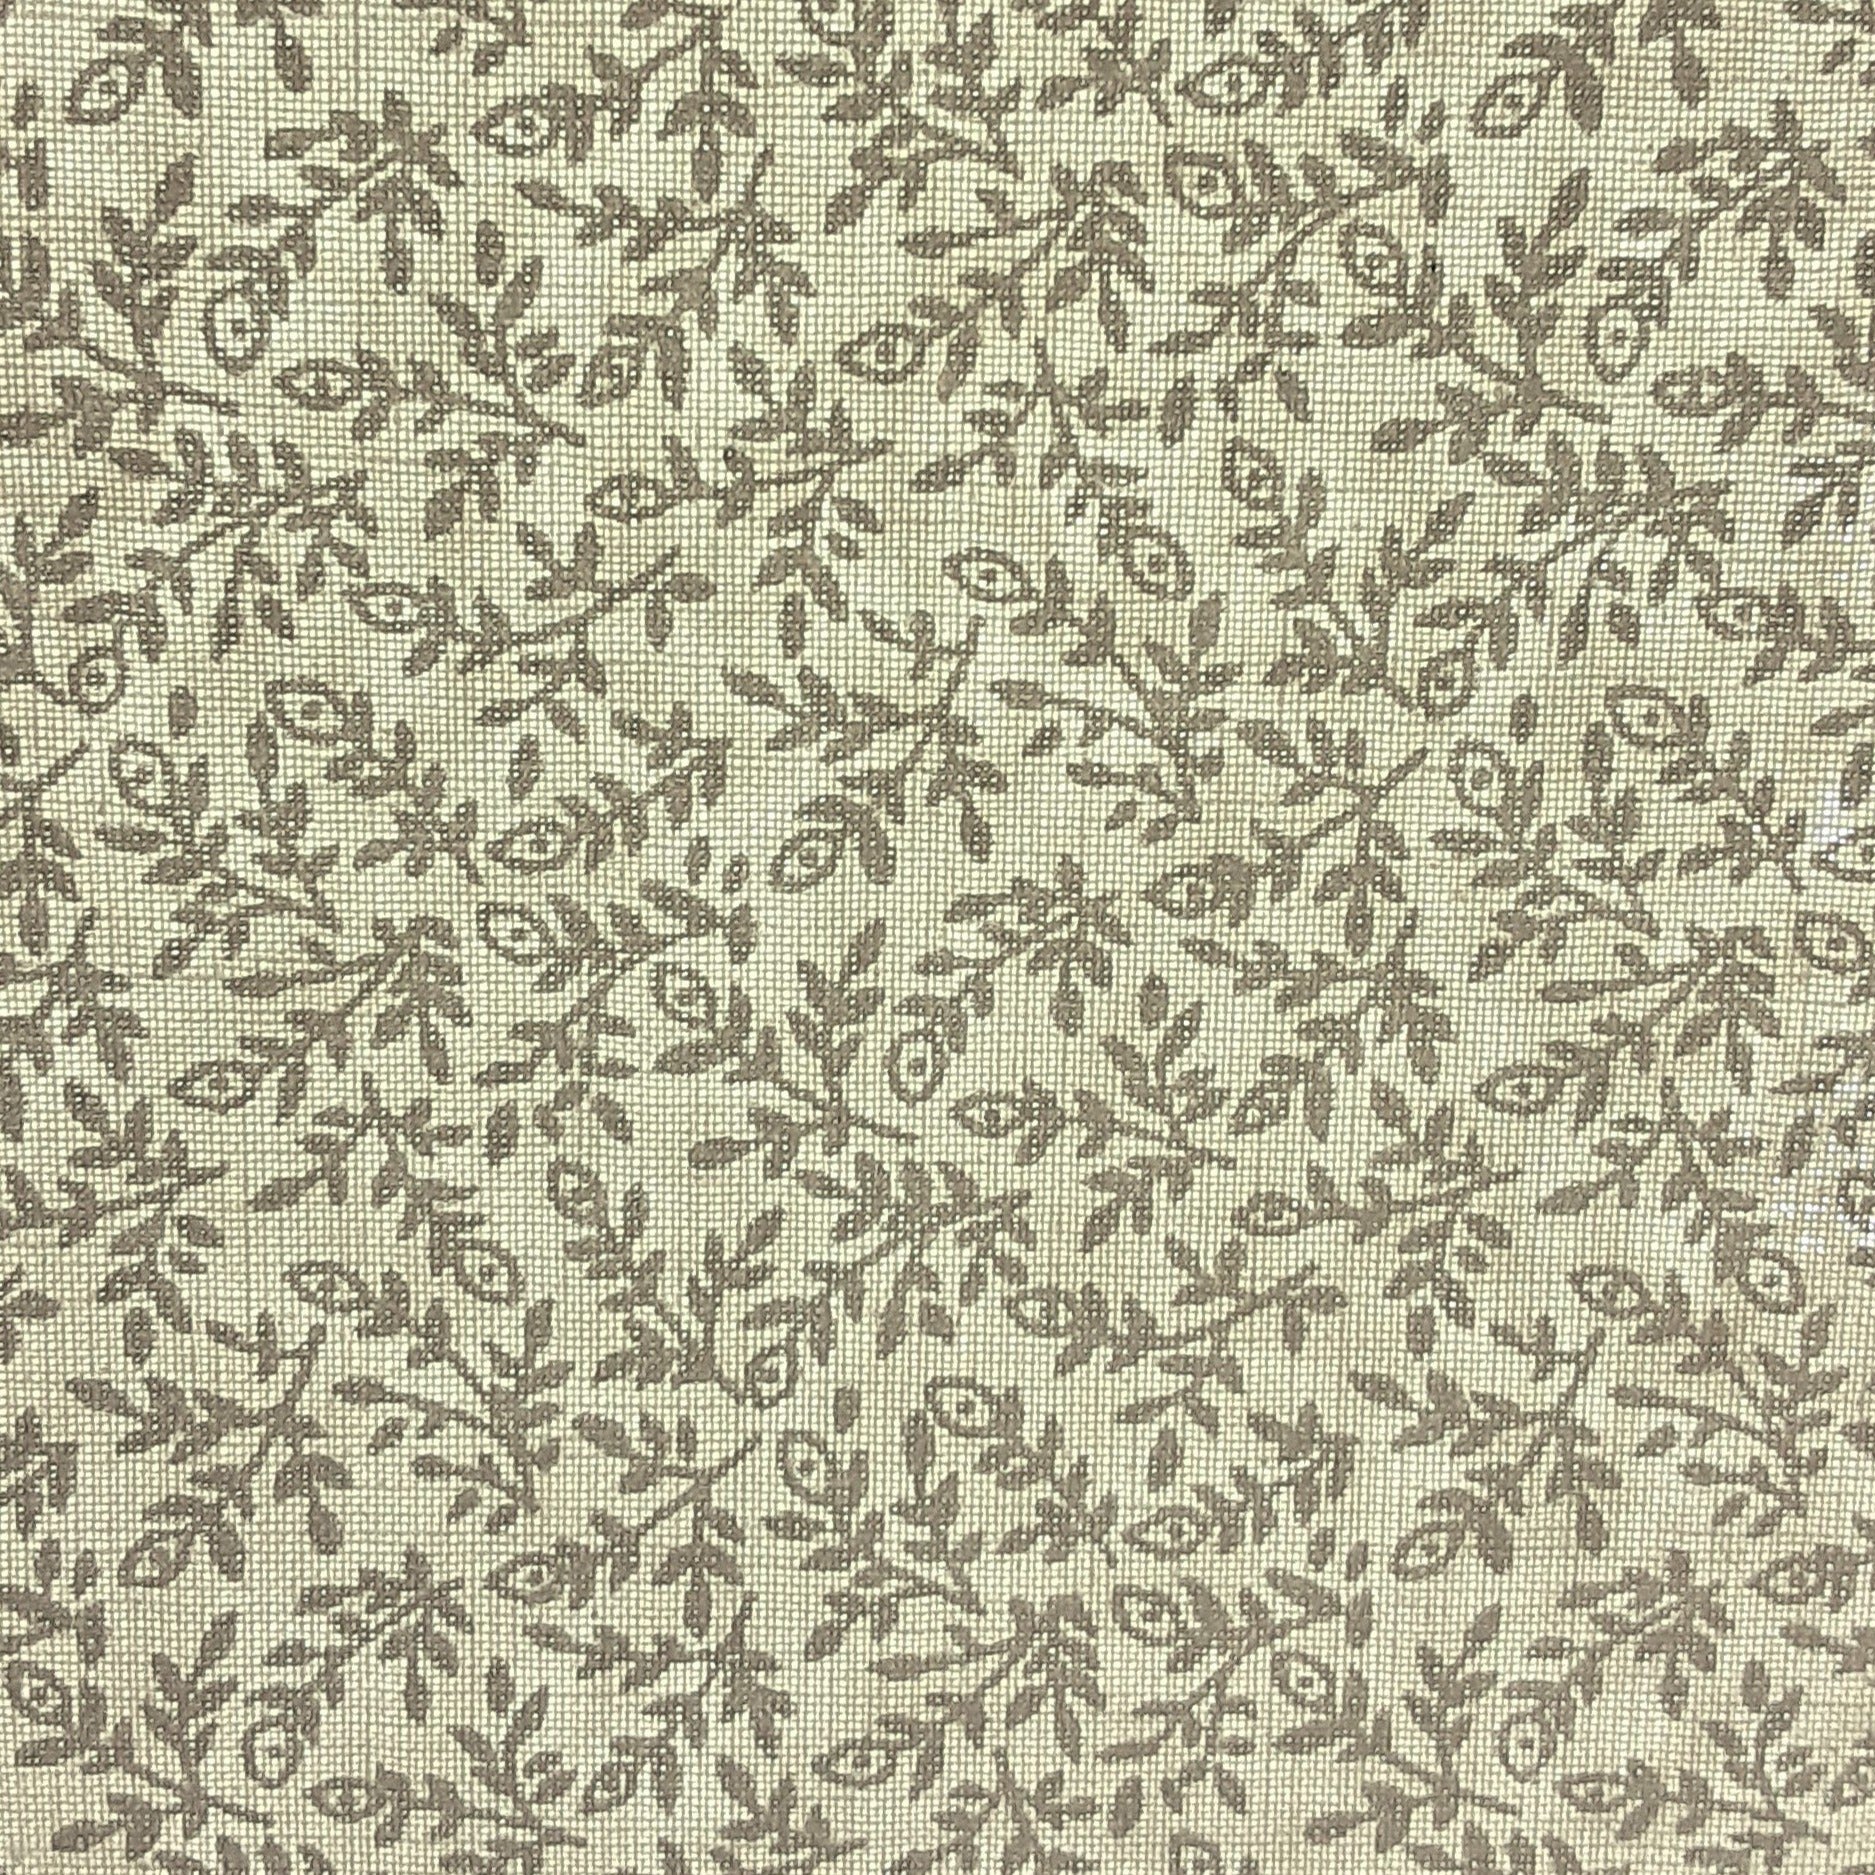 Ivory #U81 Italiana Tonal Woven Fabric - SKU 5803A